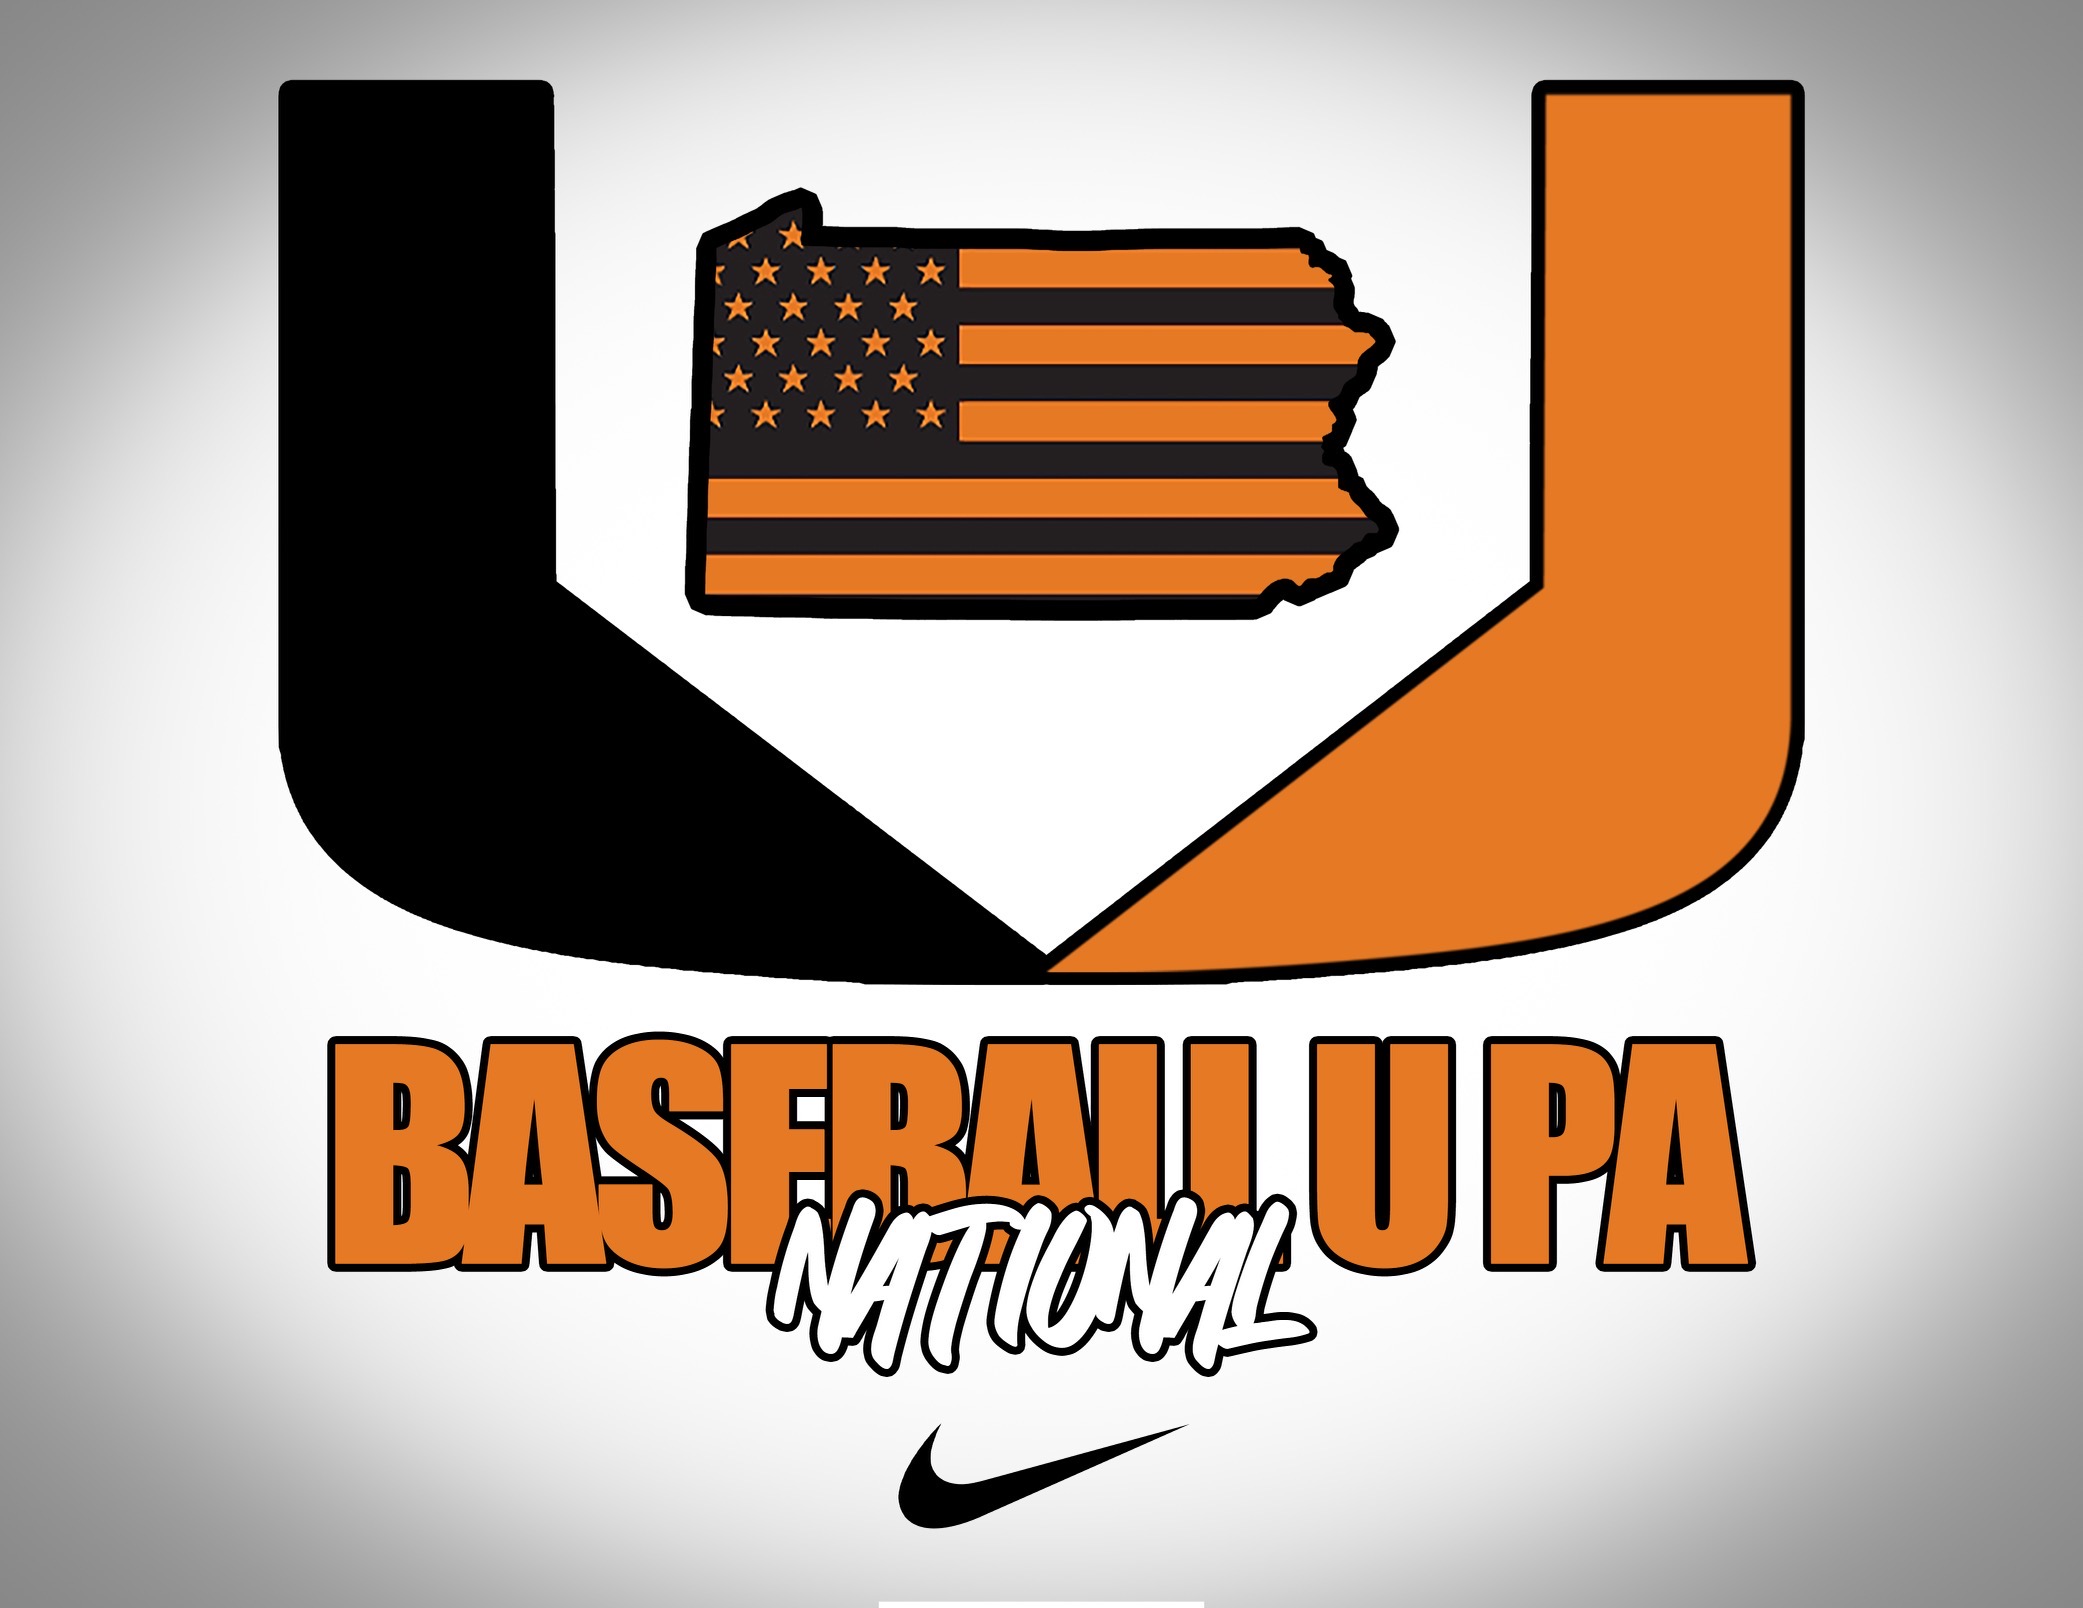 Baseball U PA is excited to announced the start of Baseball U PA National teams 13u-17u